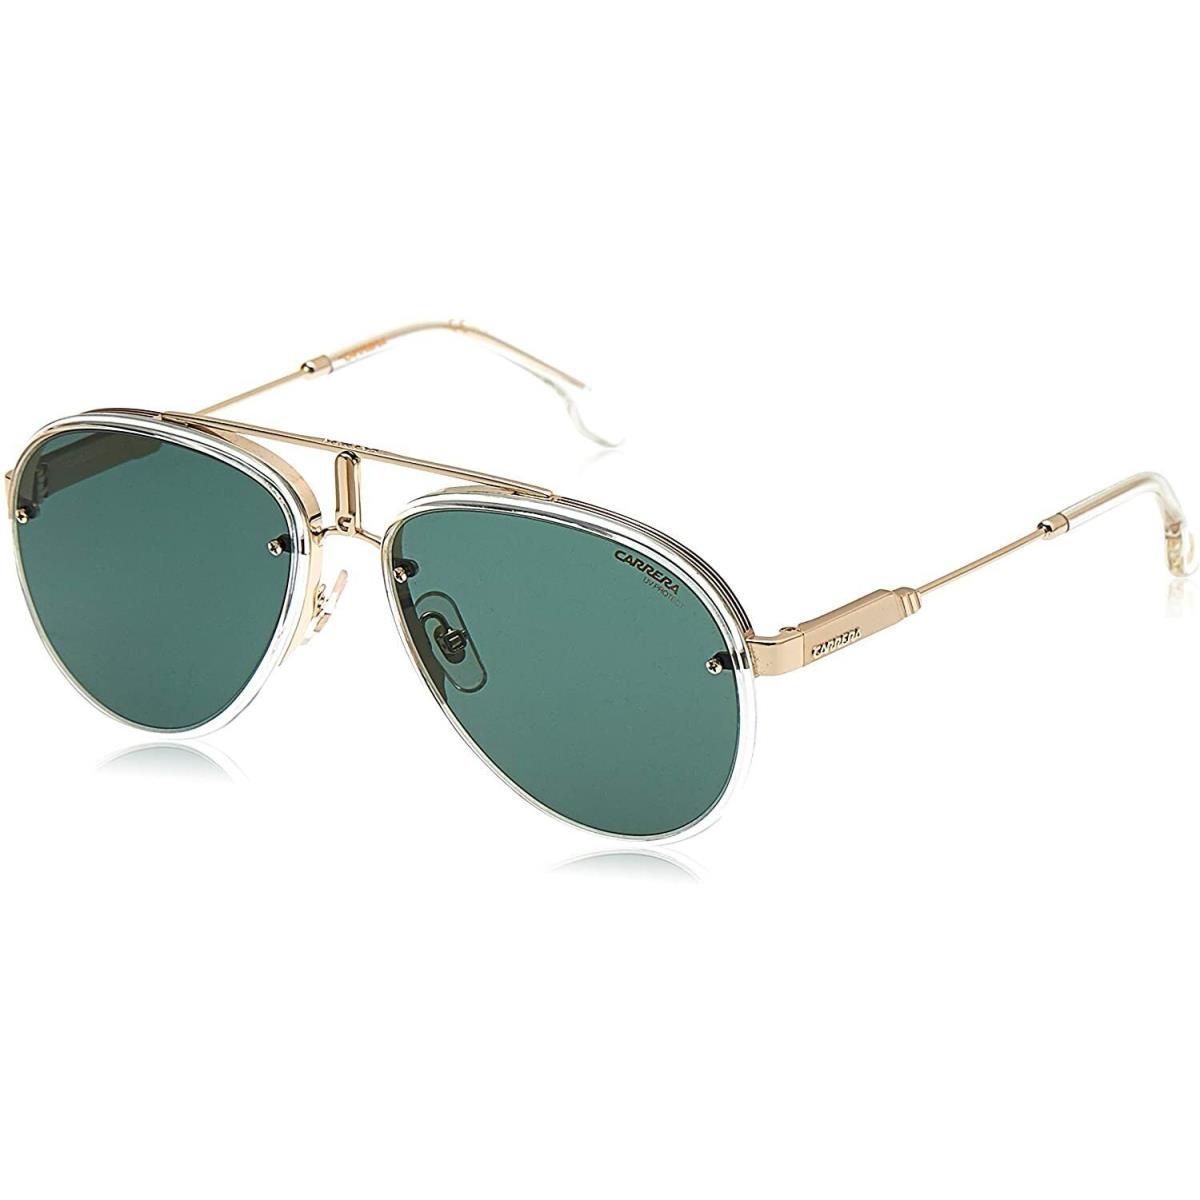 Carrera Glory Gold Crystal/green 58/17/145 Unisex Aviator Sunglasses - Gold Frame, Green Lens